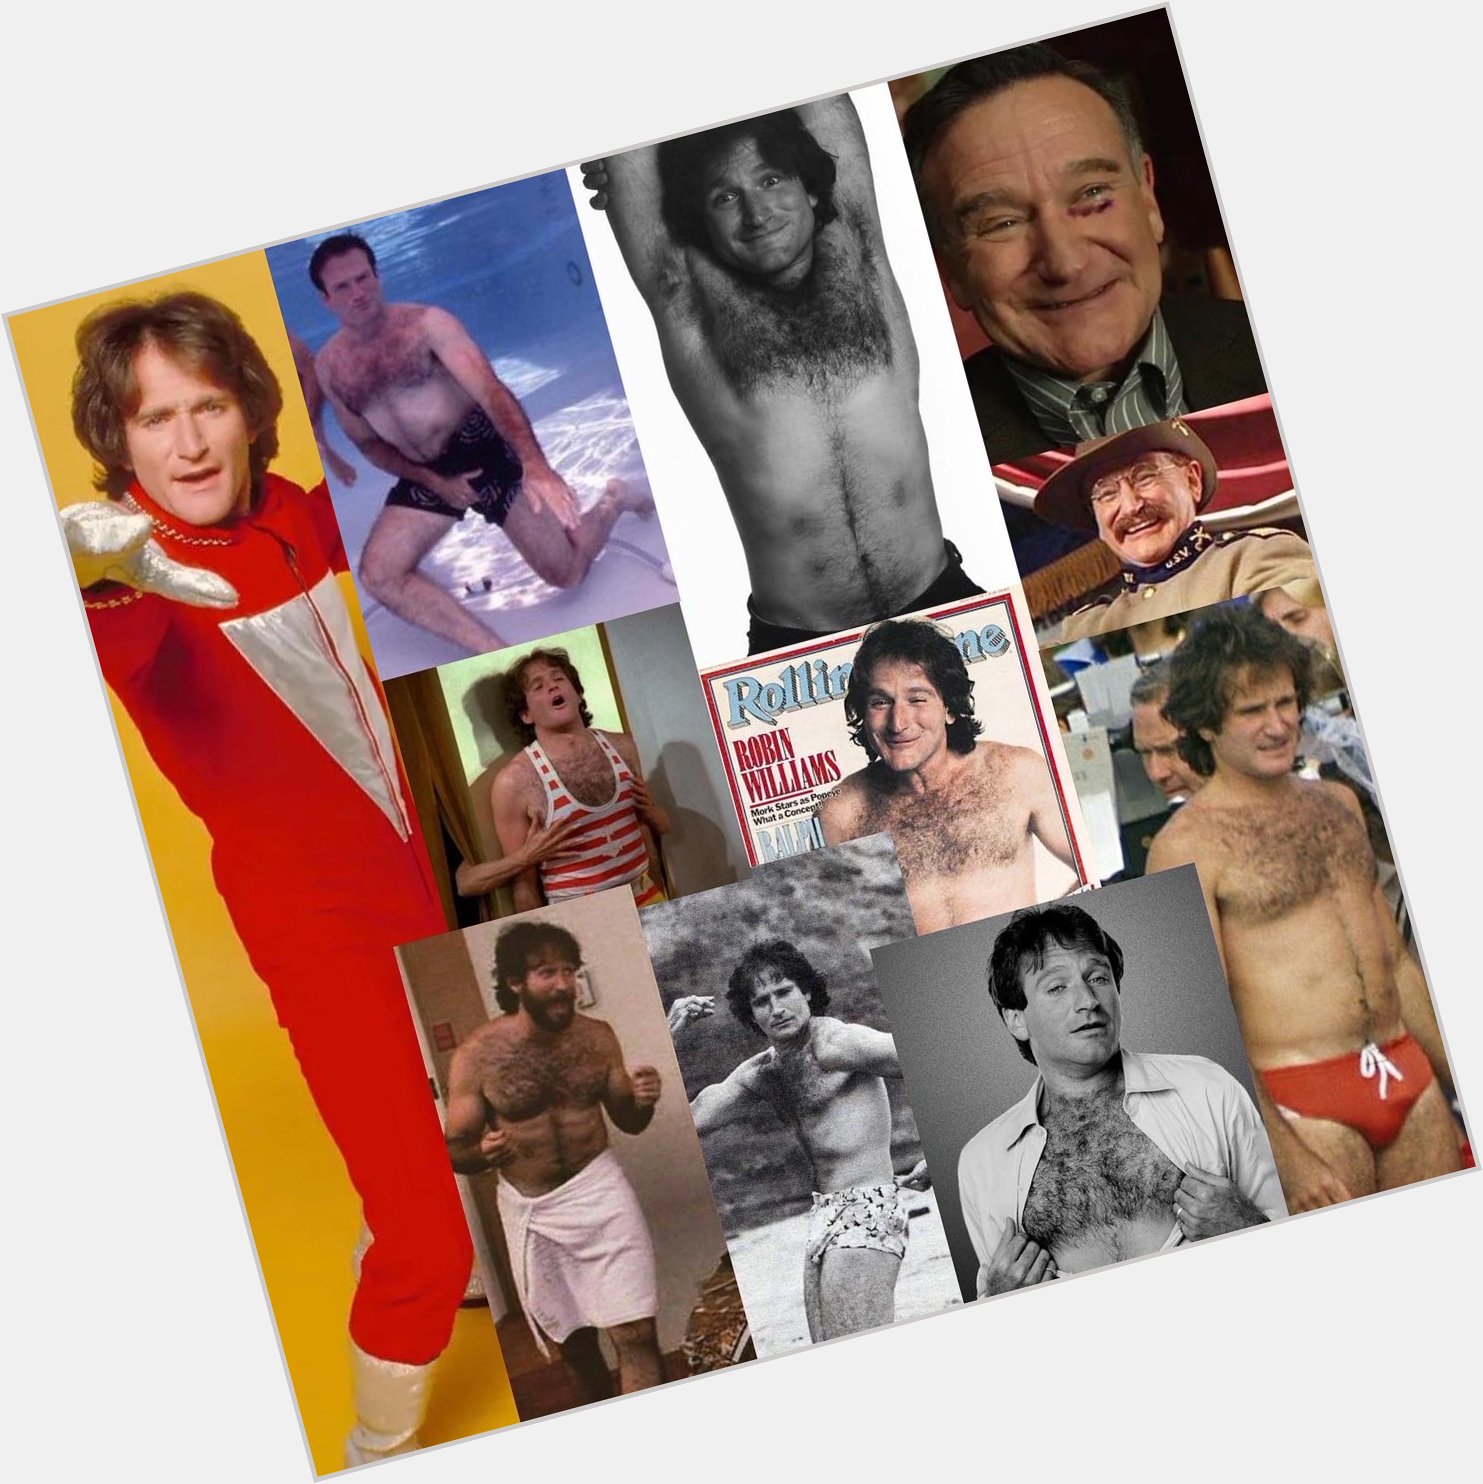 Happy Robin Williams s birthday.  